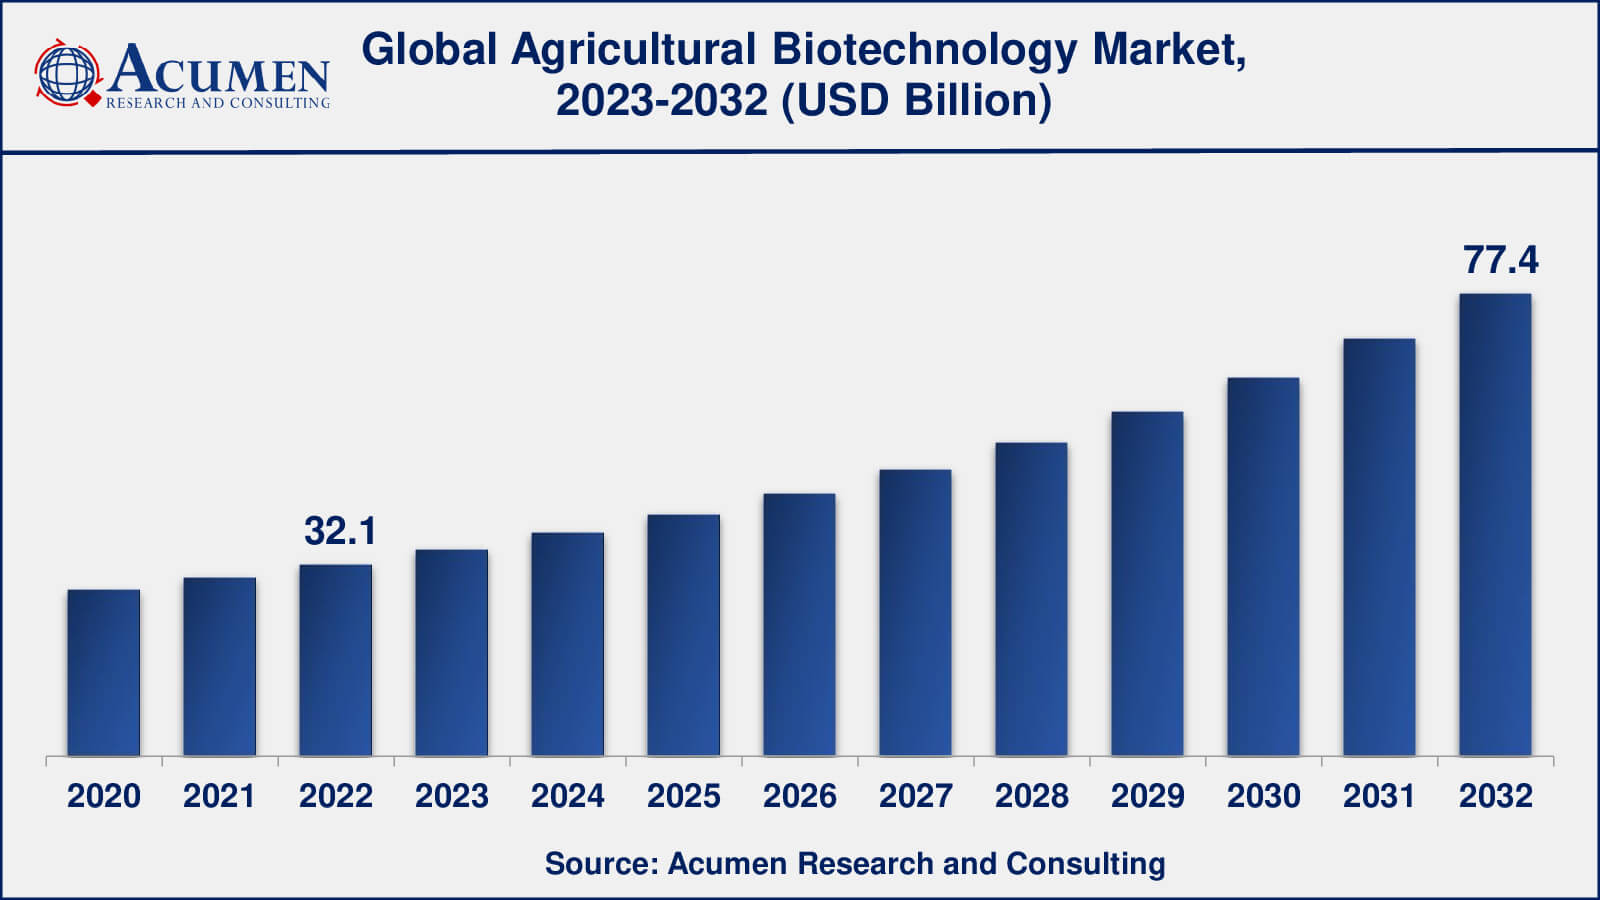 Global Agricultural Biotechnology Market Dynamics